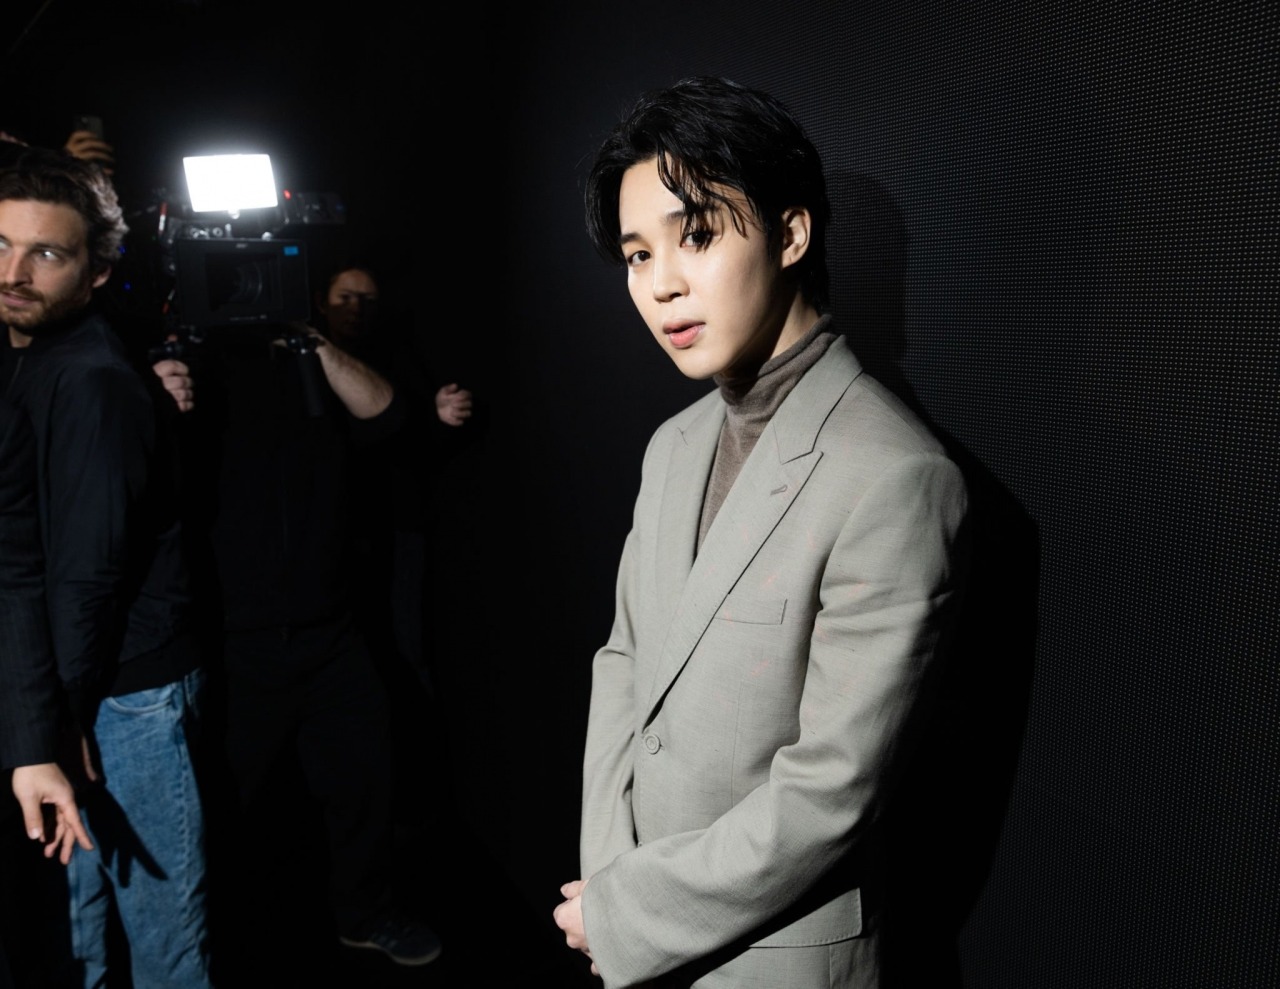 Dior appoints BTS star Jimin as a global brand ambassador - KESQ